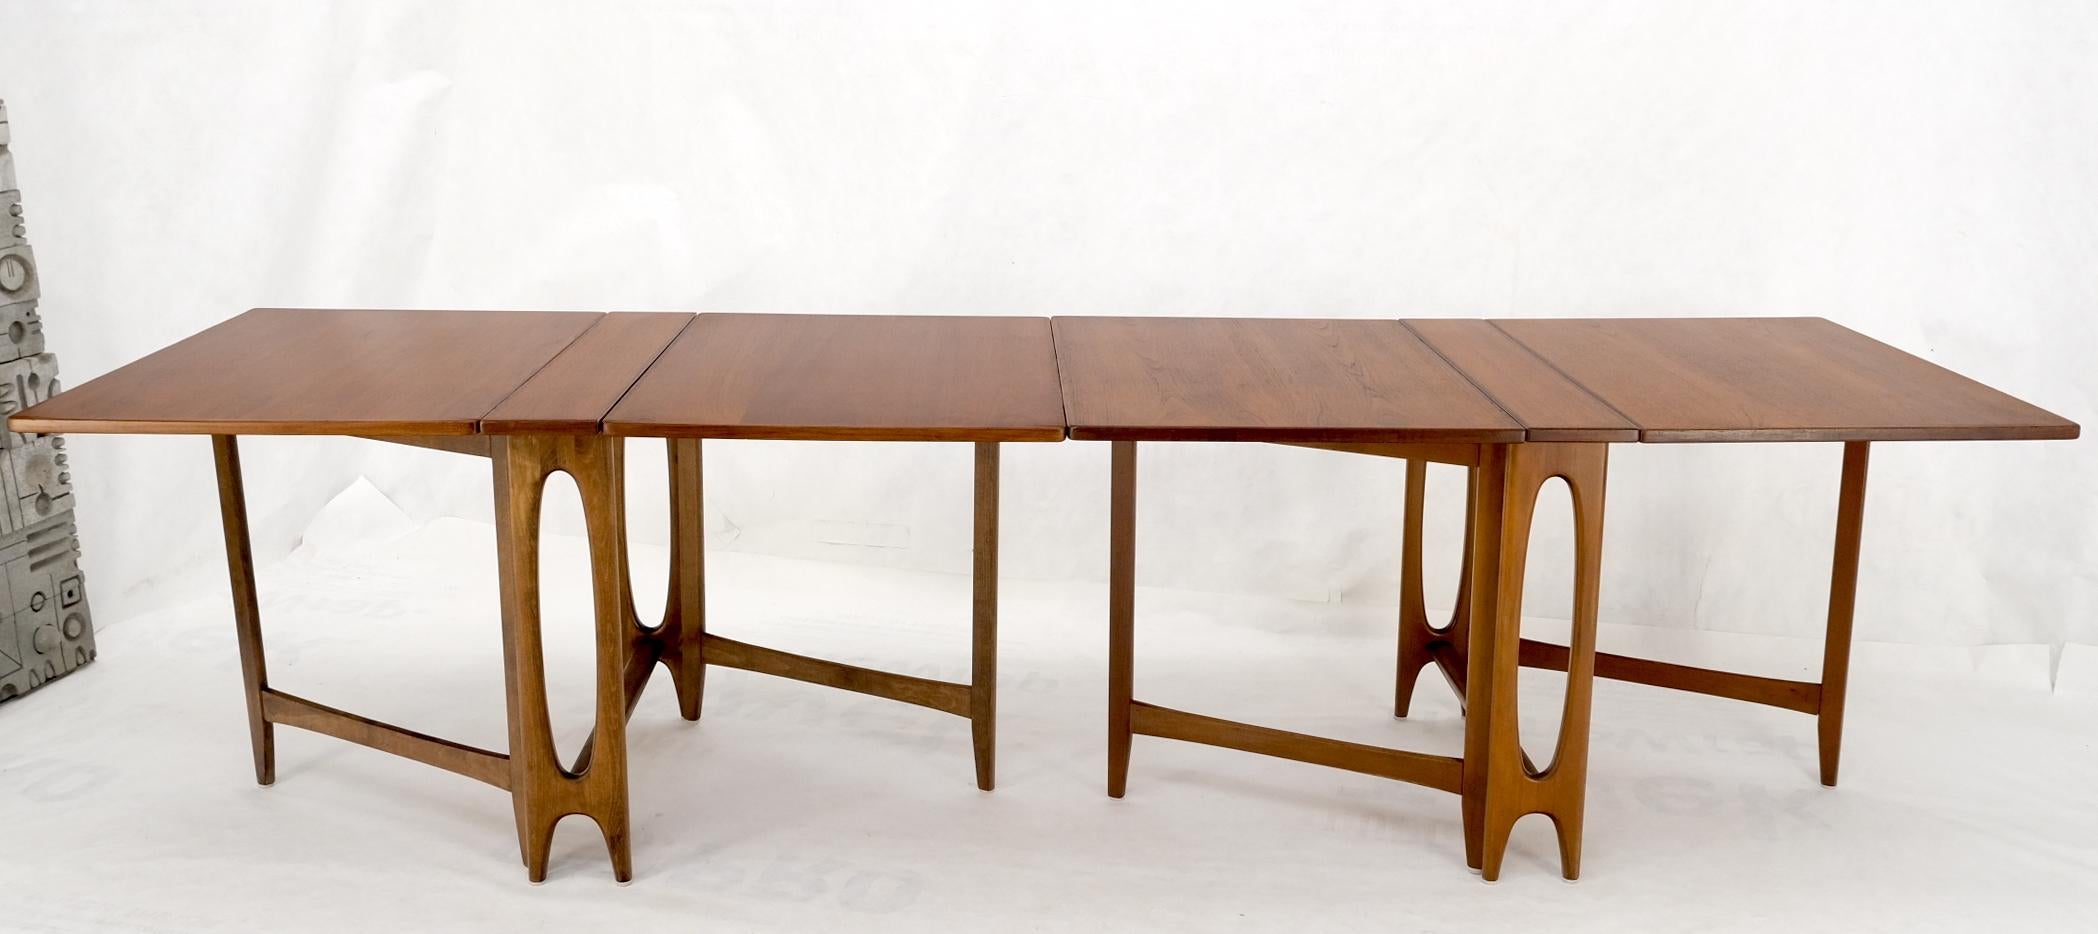 Teak Danish Mid-Century Modern Banquet Dining Gate Leg Maria Table 2pcs MINT! For Sale 11